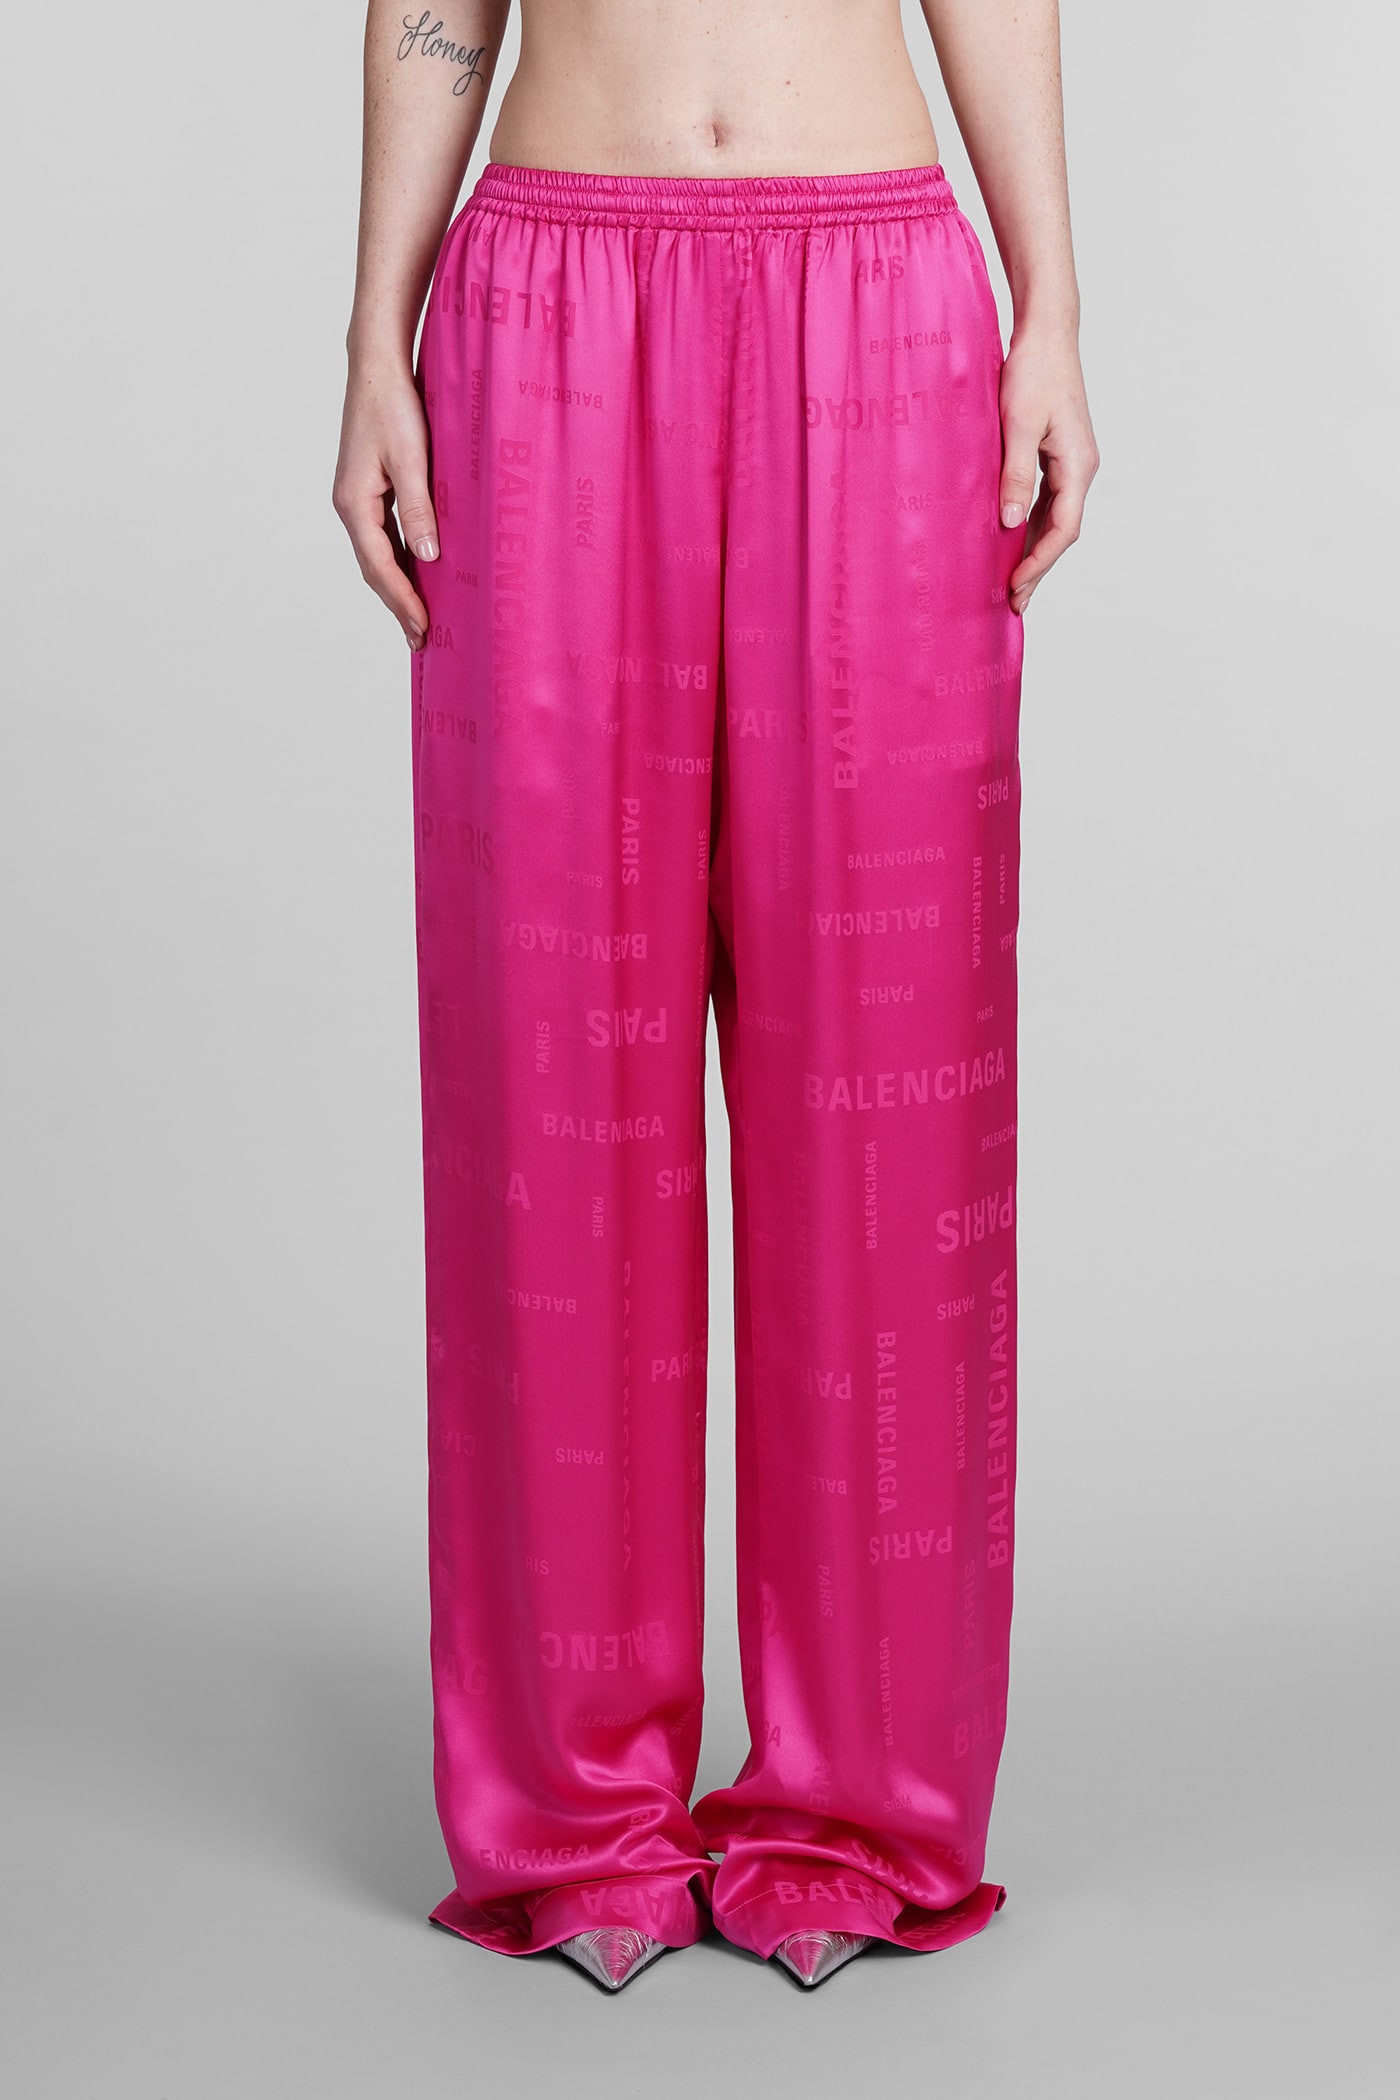 Balenciaga Trousers In Fuxia Silk